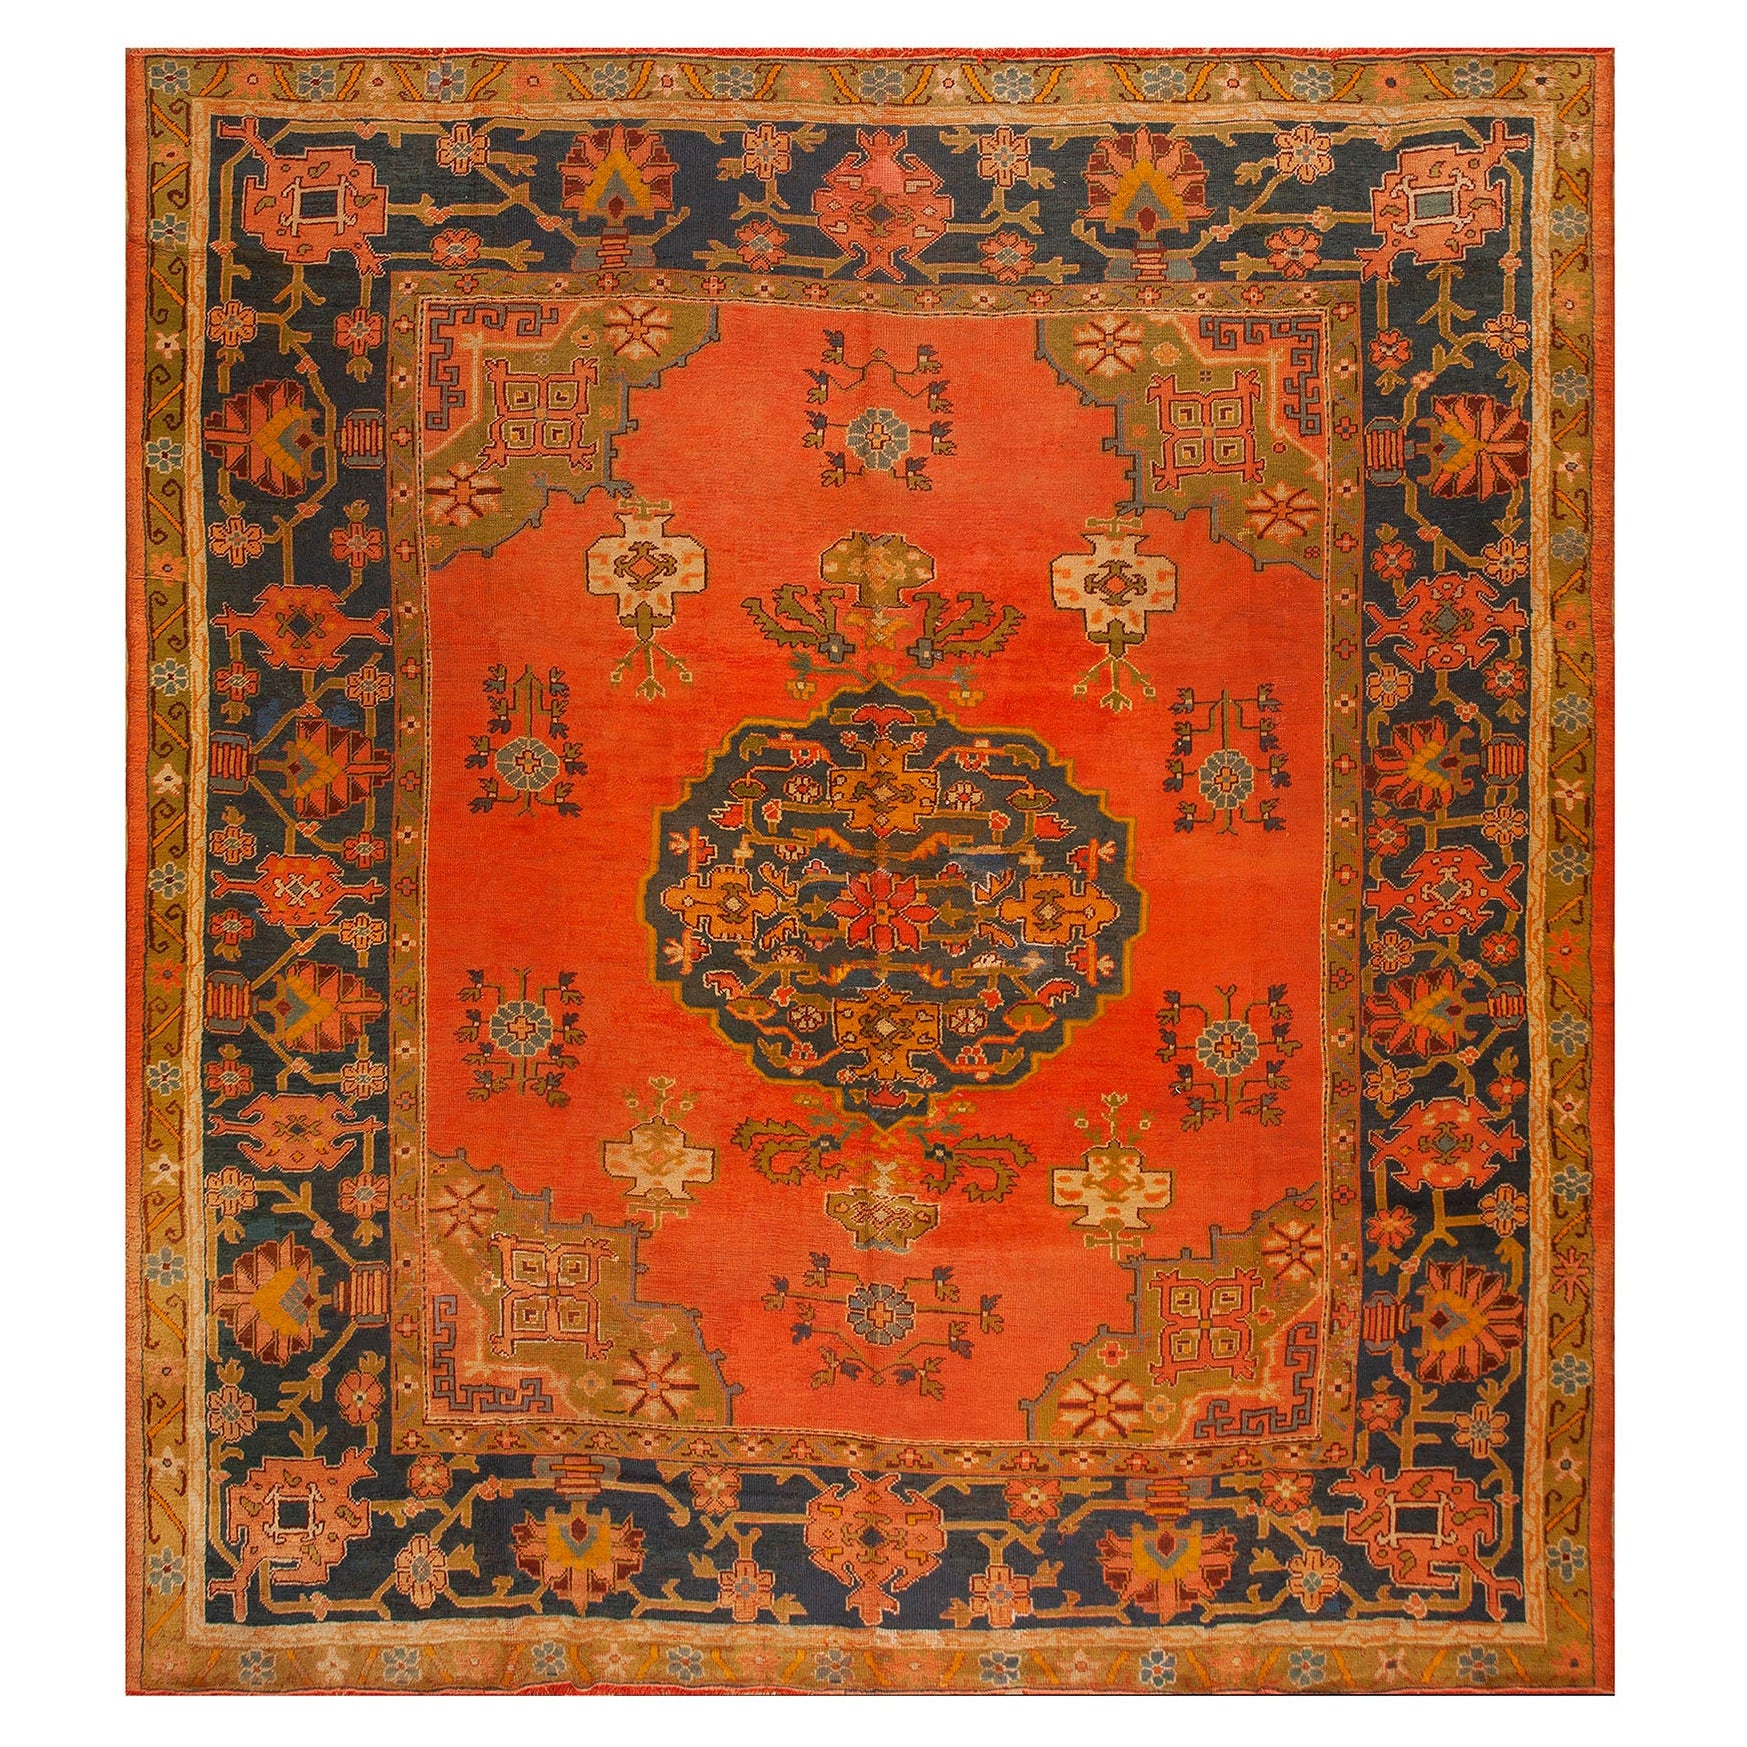 Late 19th Century Turkish Oushak Carpet ( 10' 7'' x 12' 2'' - 322 x 370 )